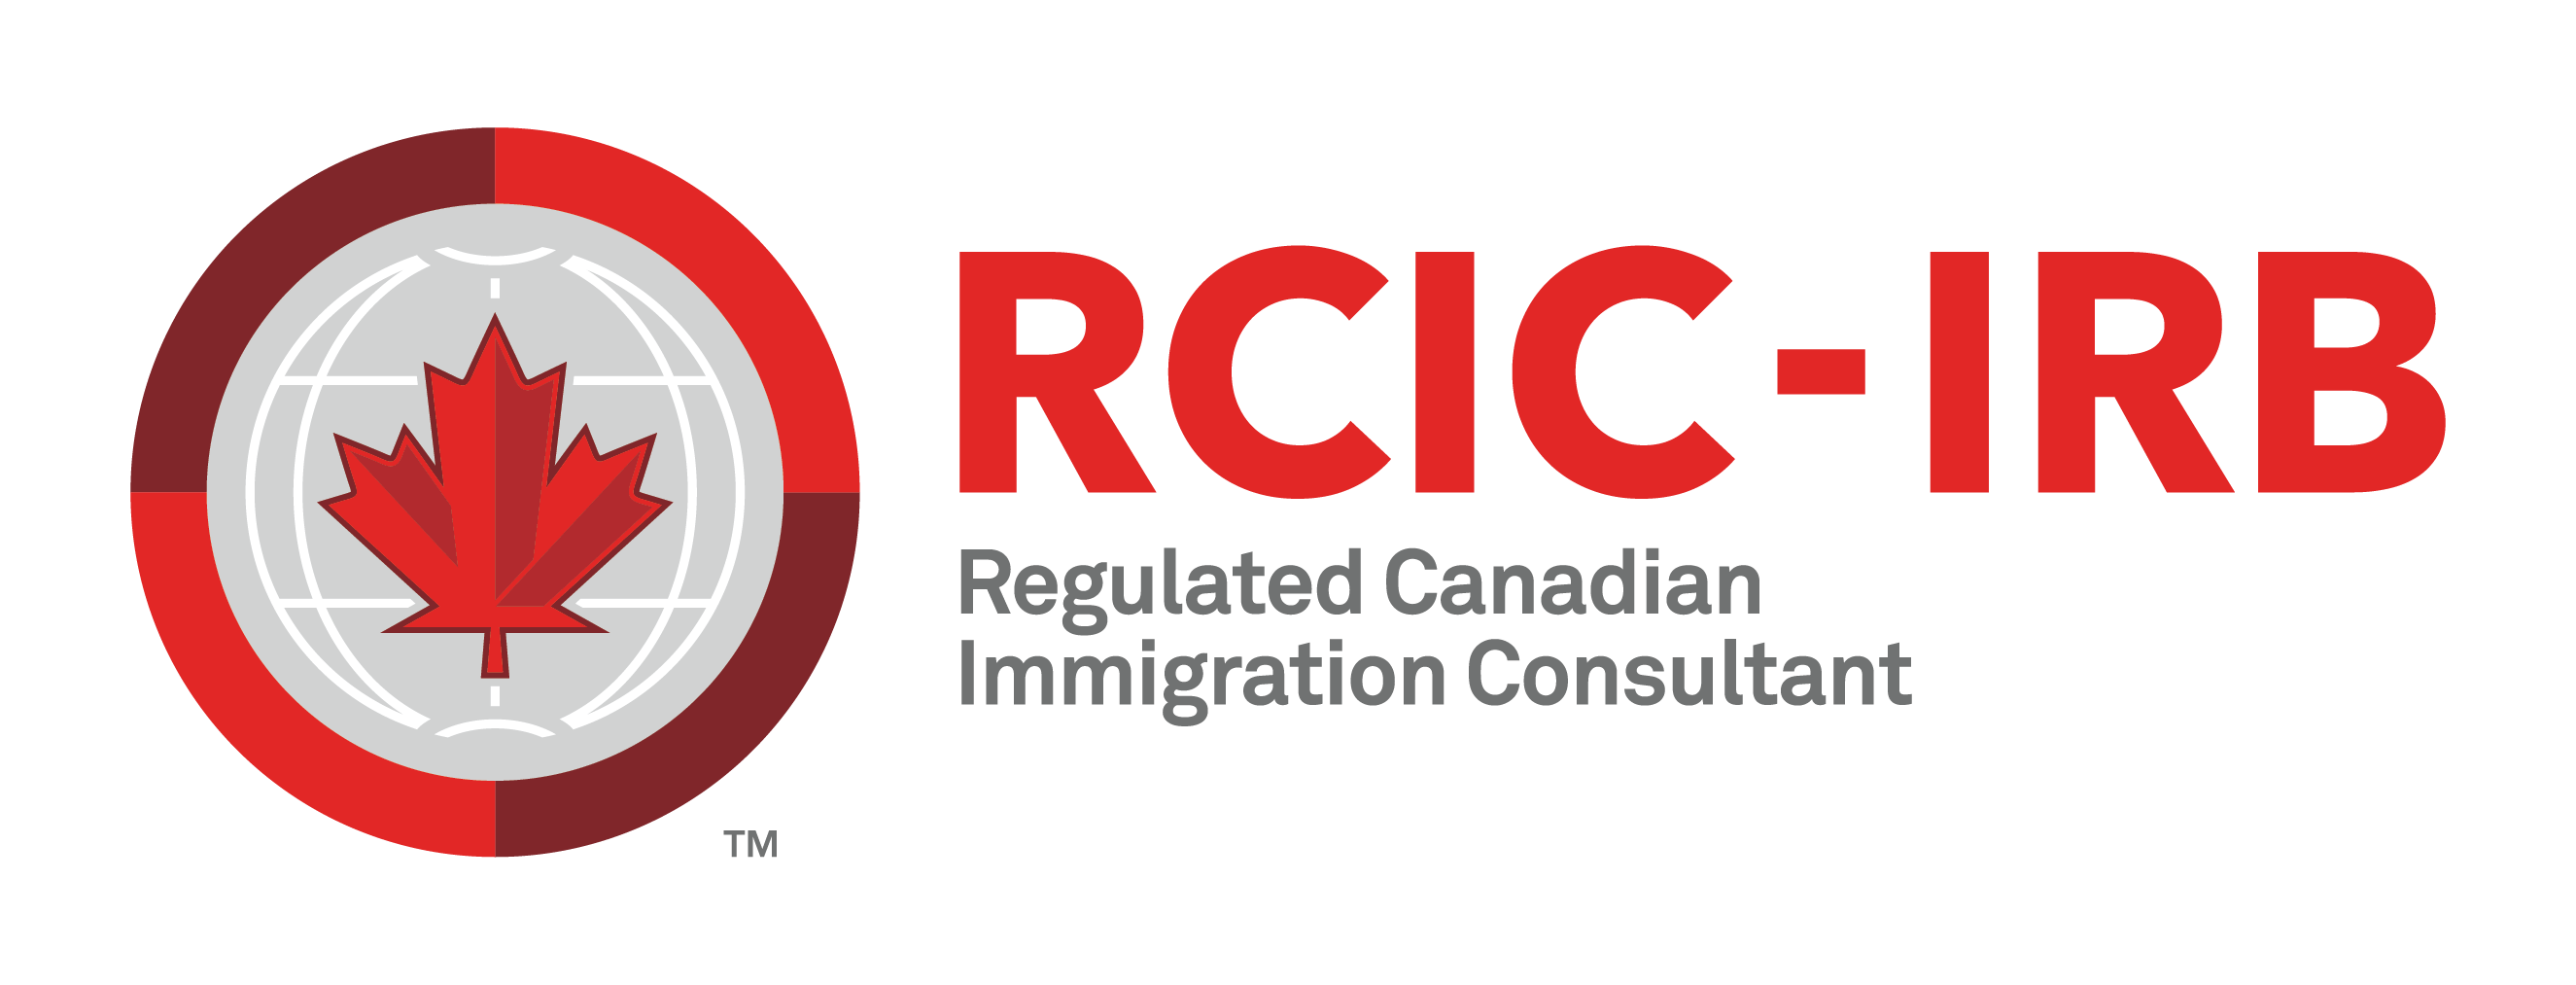 Canadian immigration consultant